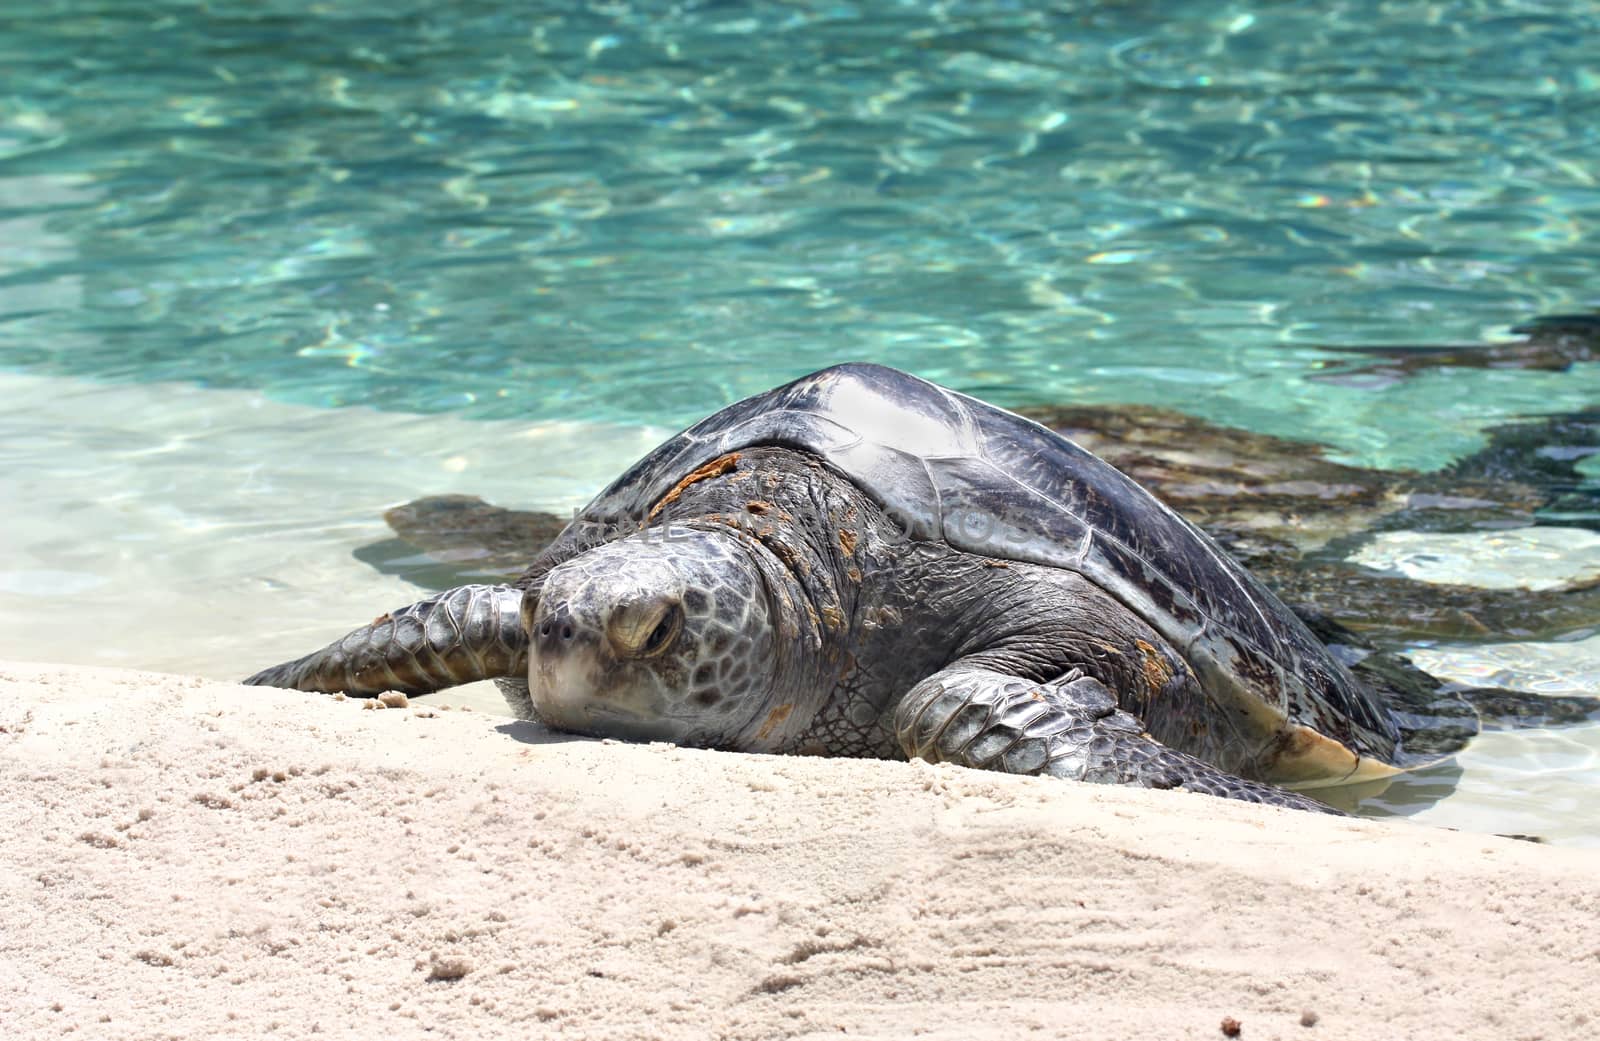 Big turtle on sand near water